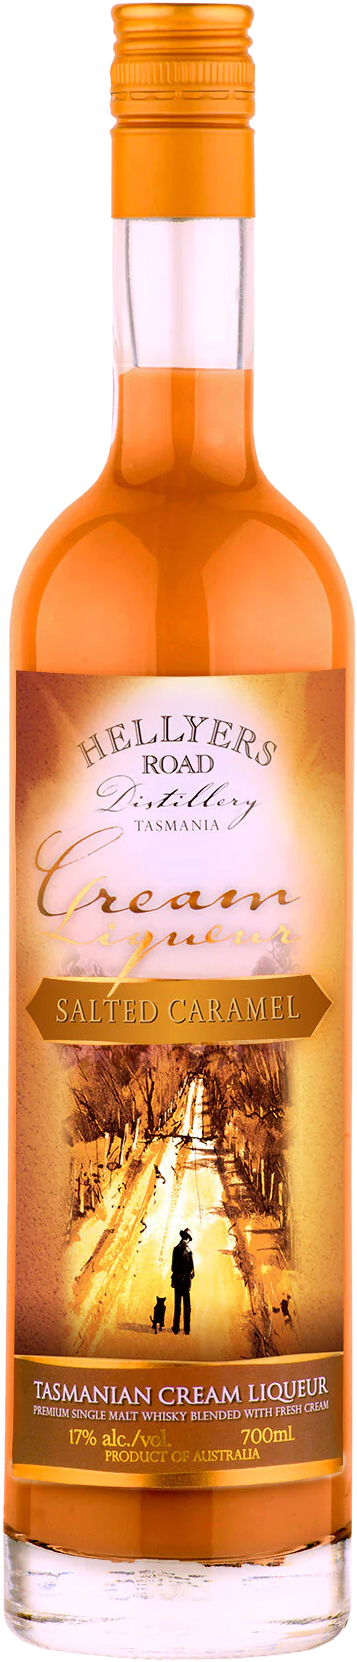 Hellyers Road Salted Caramel Whisky Cream Liqueur 700ml